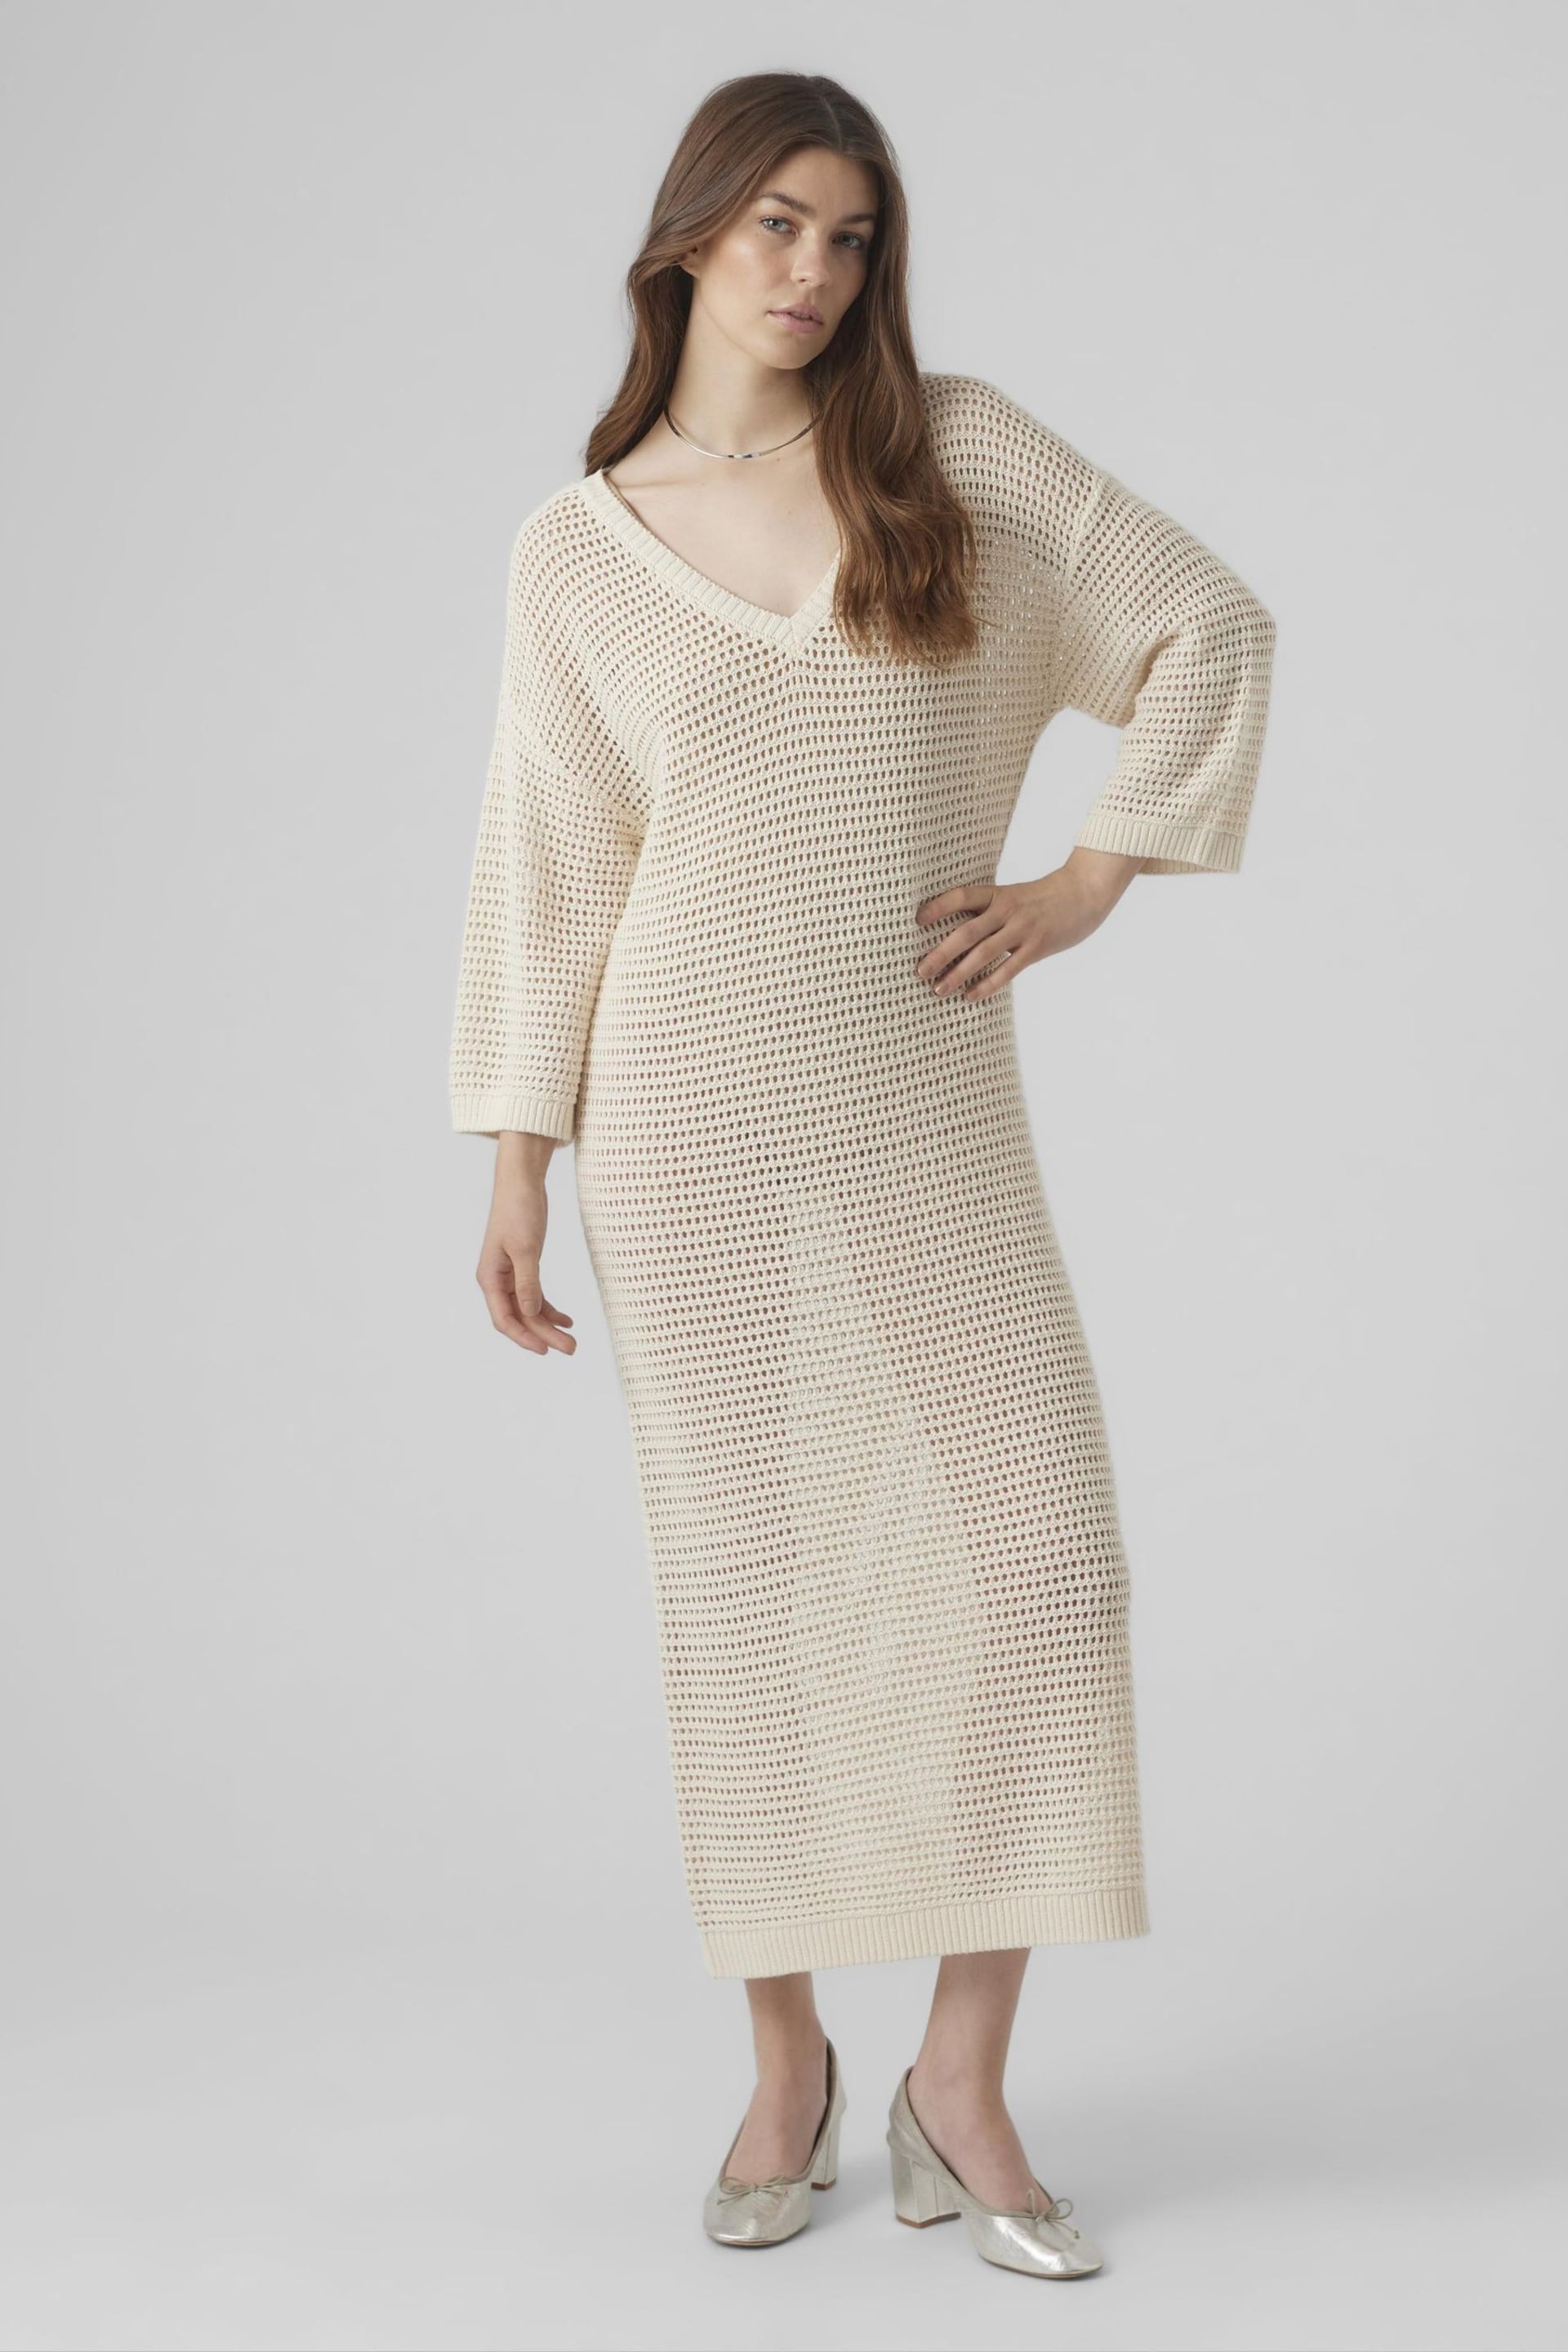 VERO MODA Cream Long Sleeve Crochet Beach Dress - Image 1 of 1